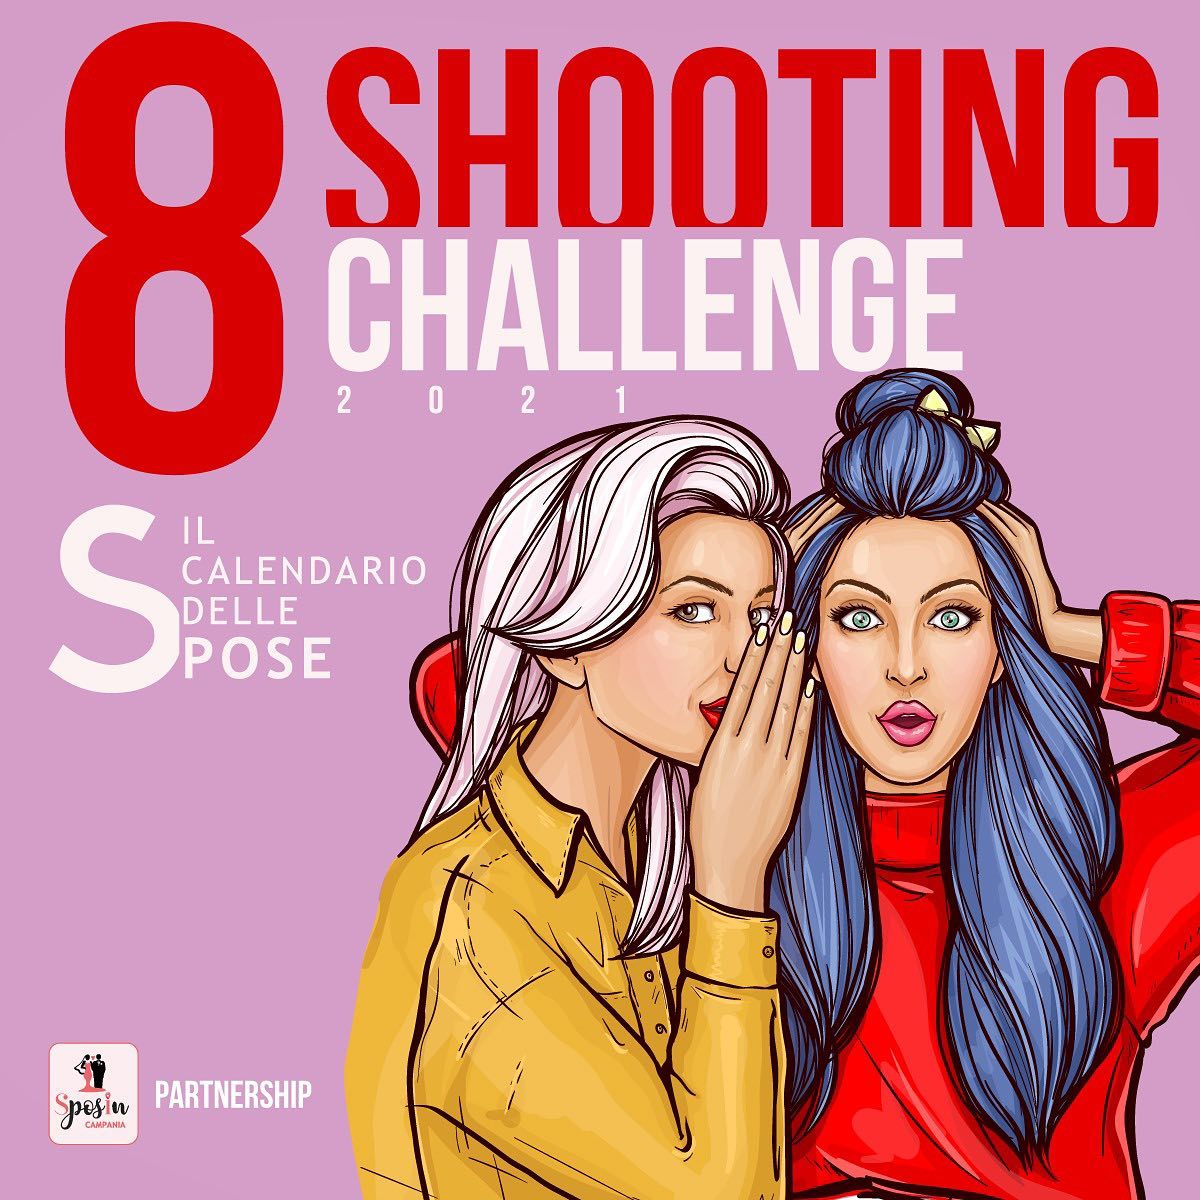 8 shooting challenge: 32 modelle, tanti professionisti, una vincitrice